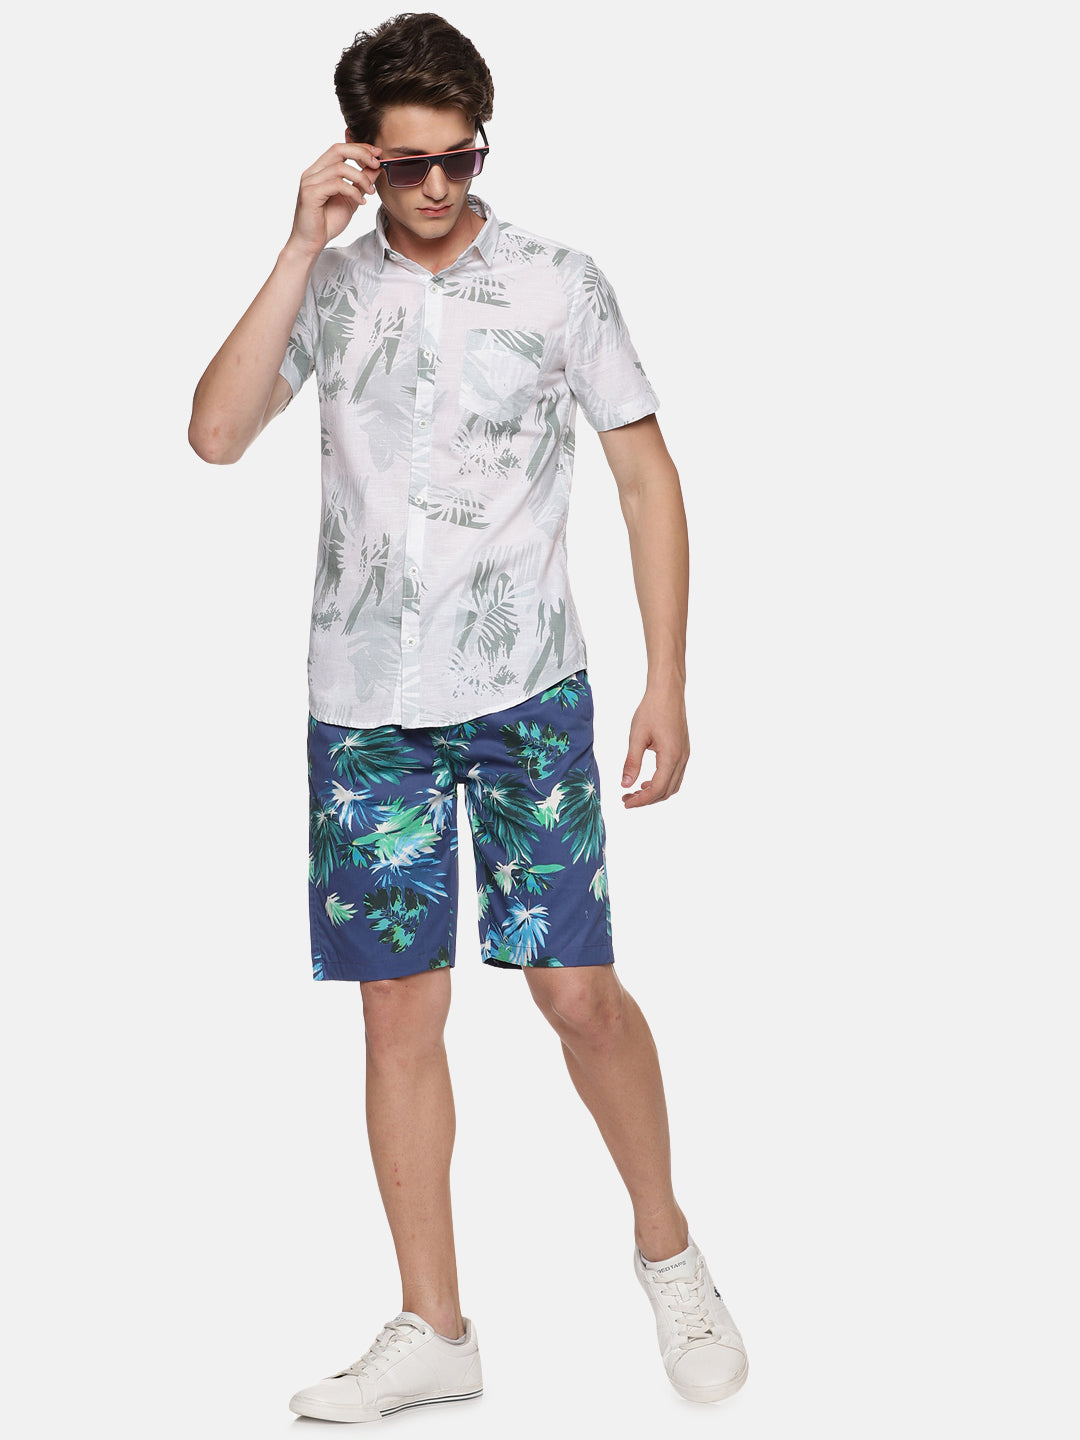 Seagrass Men's Tropical Printed Shorts - Tusok